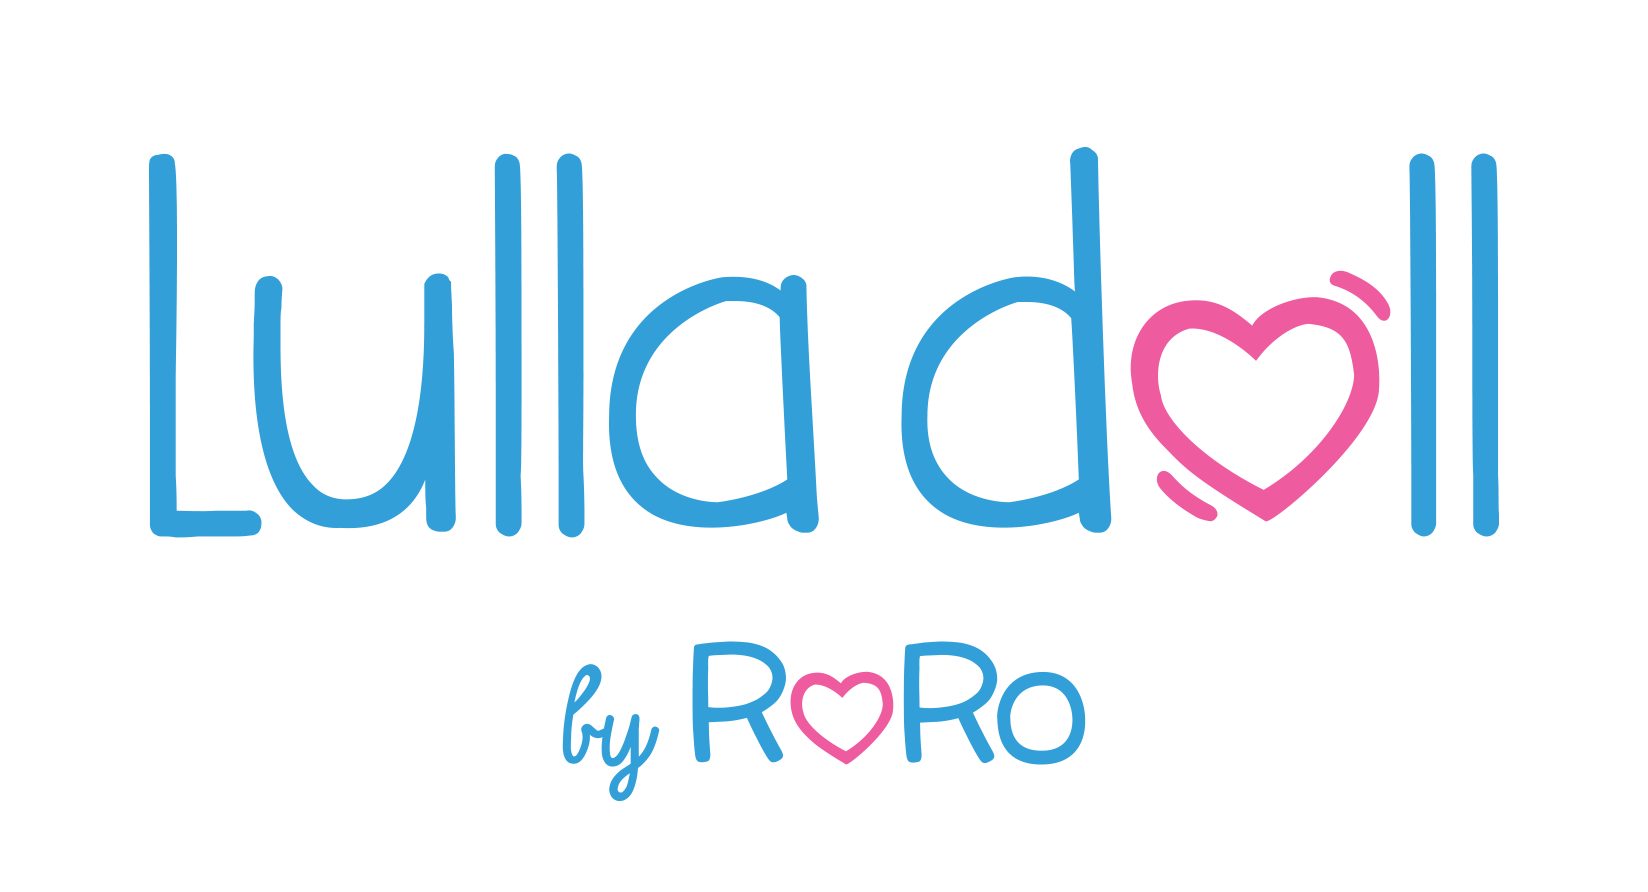 Lulla doll by RoRo